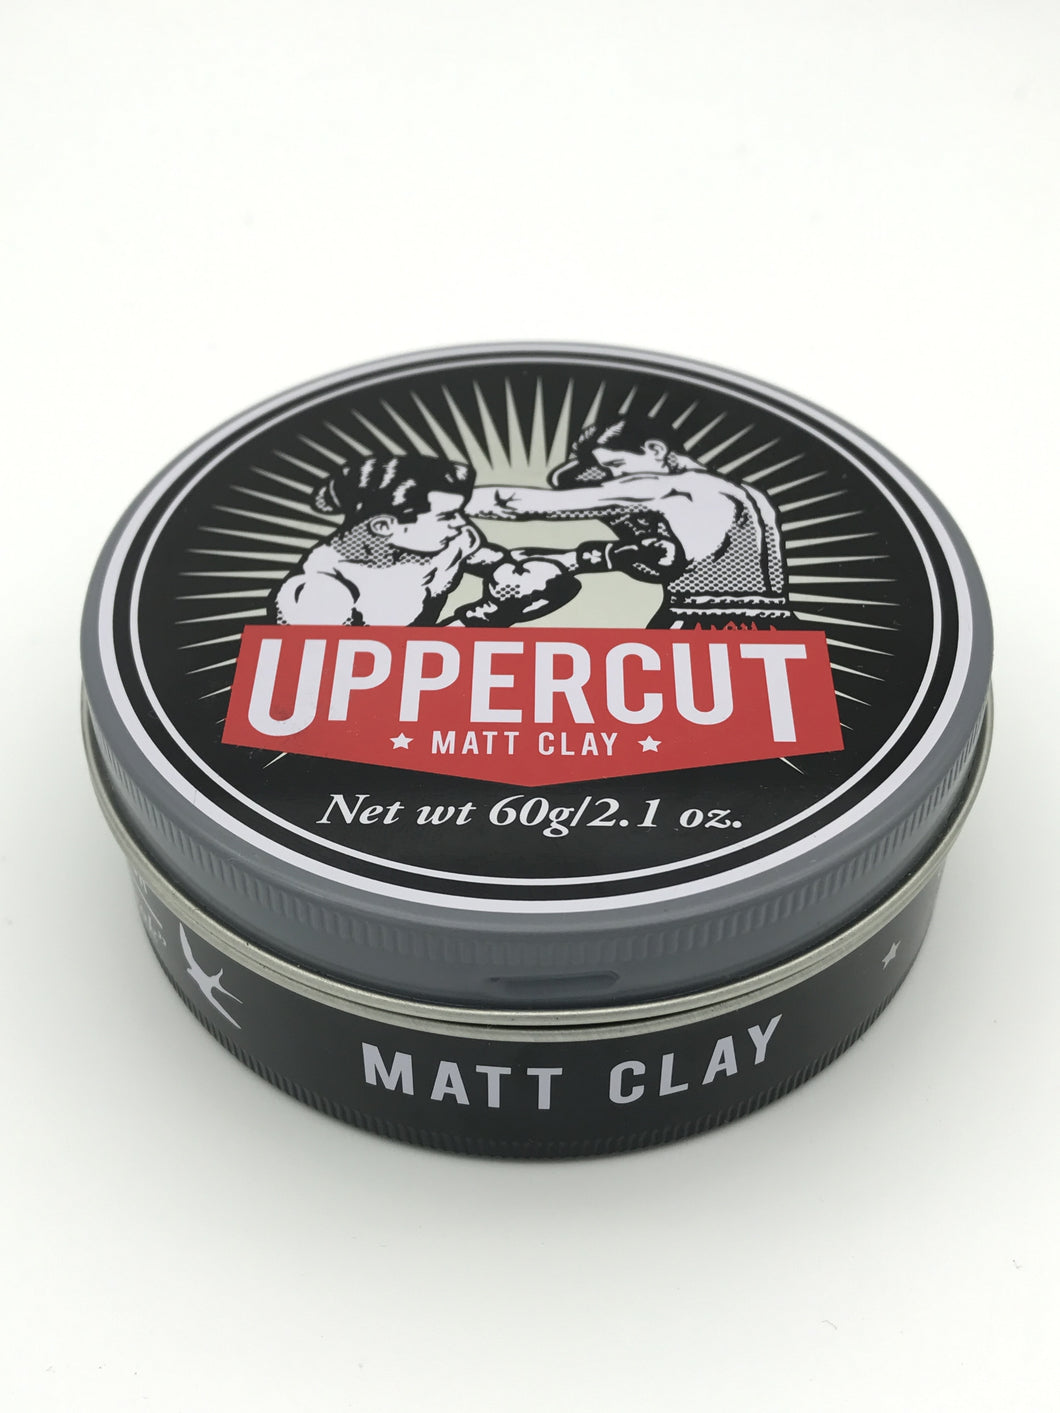 Uppercut Matt Clay